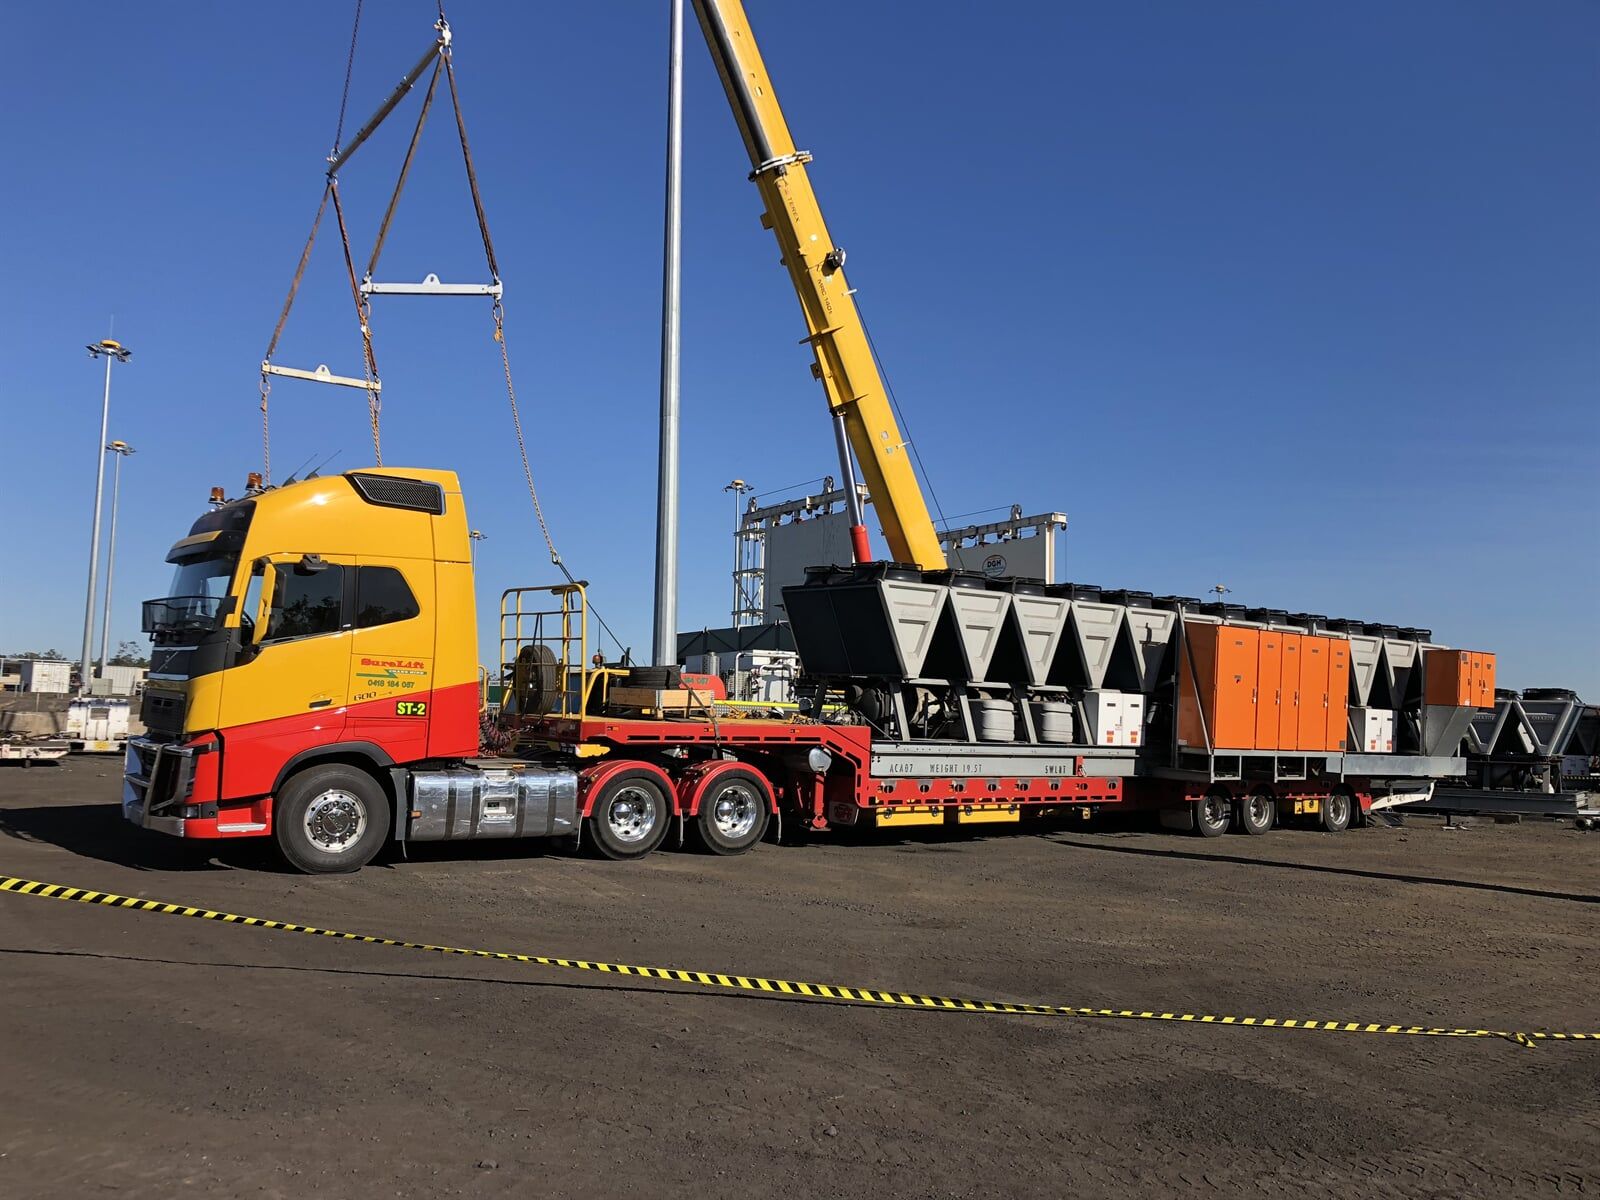 Crane Trucks Loaded With Supplies — Crane Hire & Transport in Moranbah, QLD